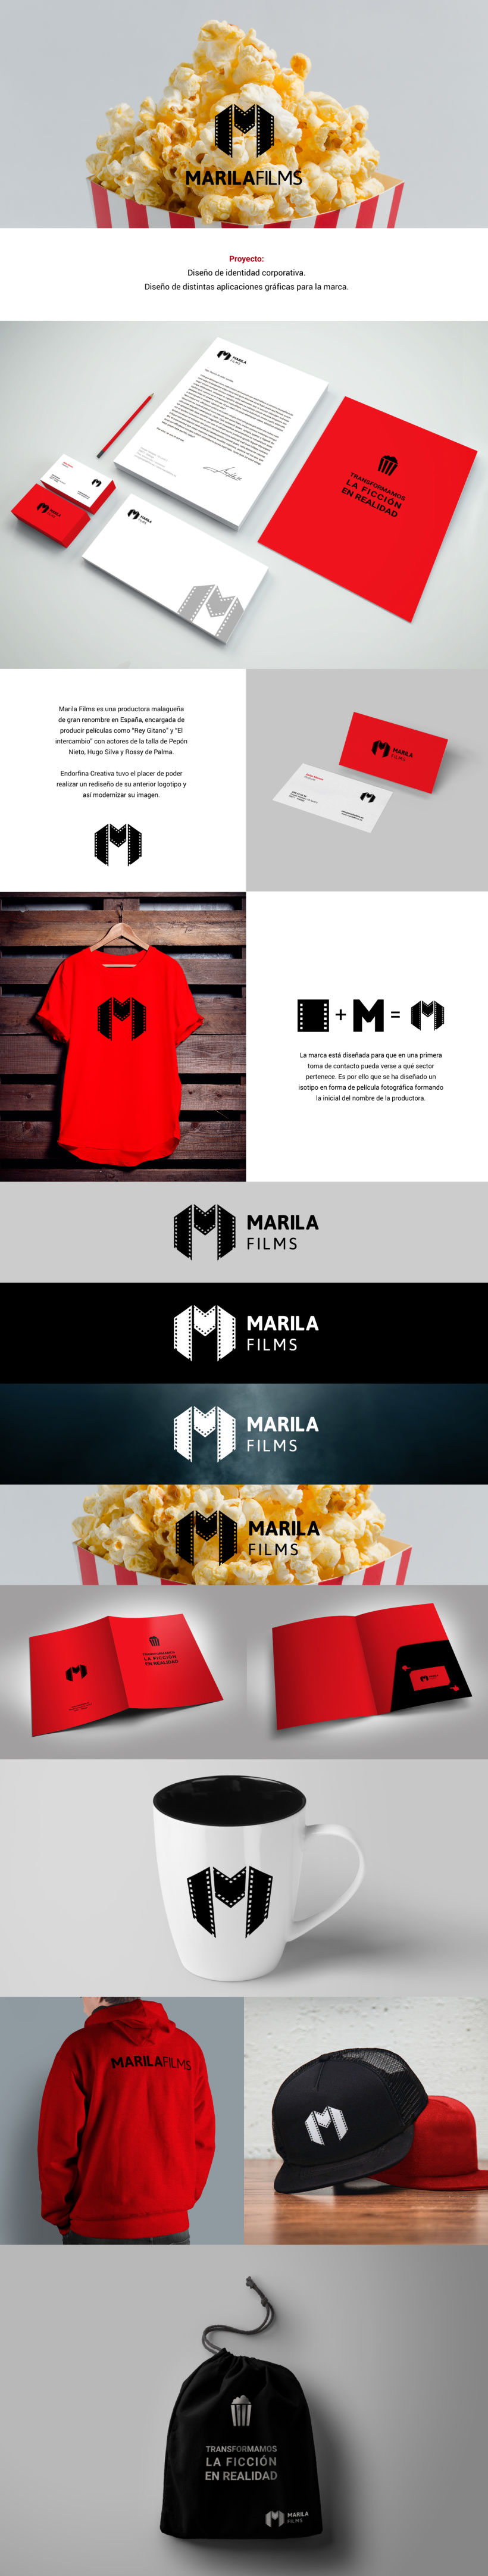 Identidad corporativa para MARILA FILMS 2